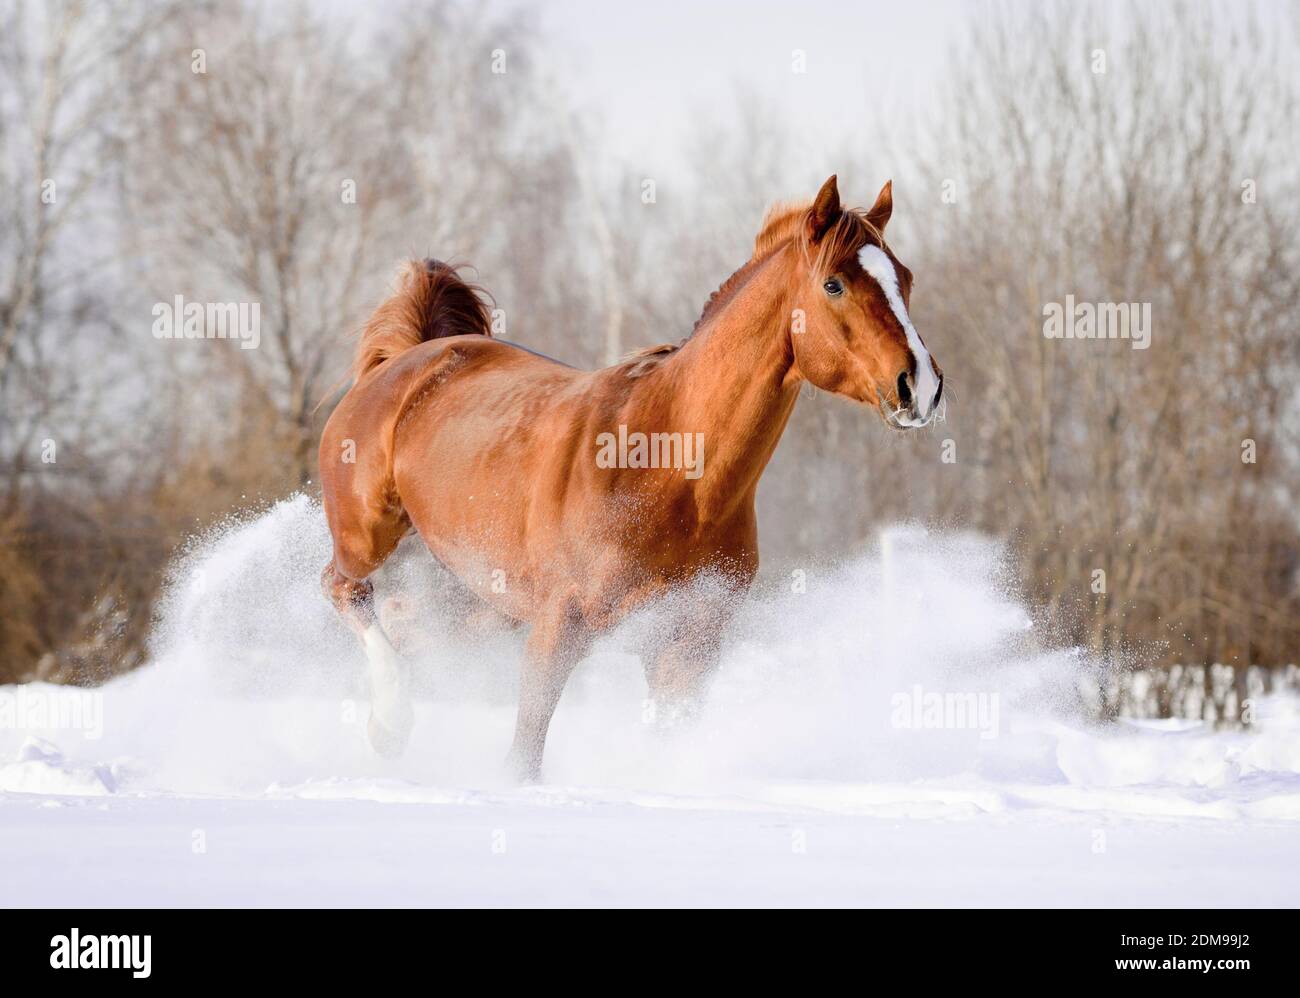 arab stallion in snow Stock Photo